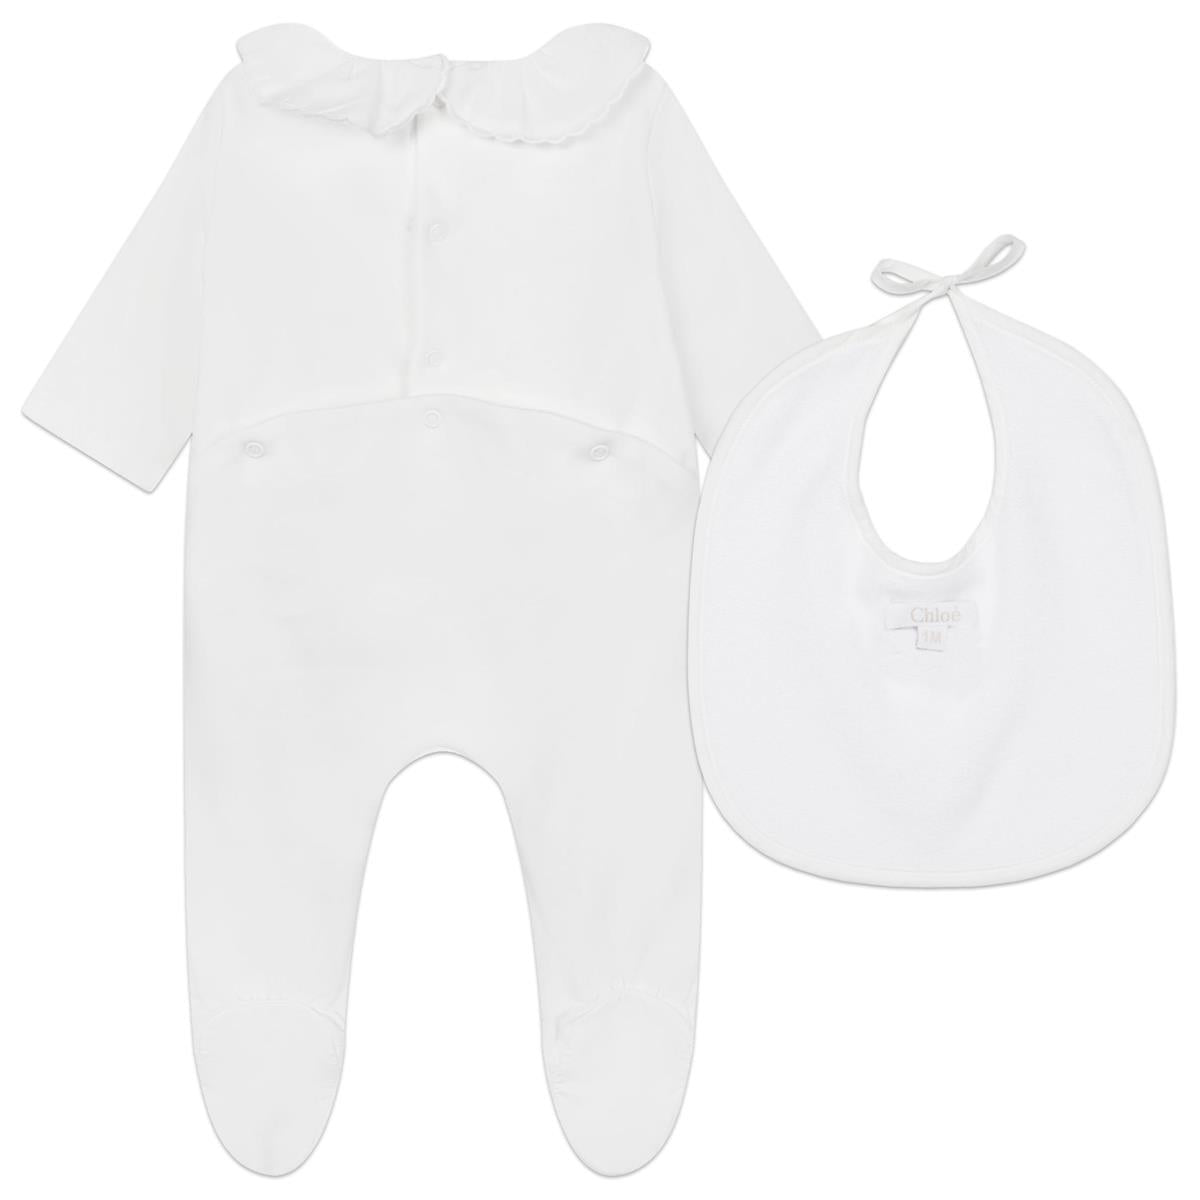 Baby Girls White Babysuit Set (2 Pack)